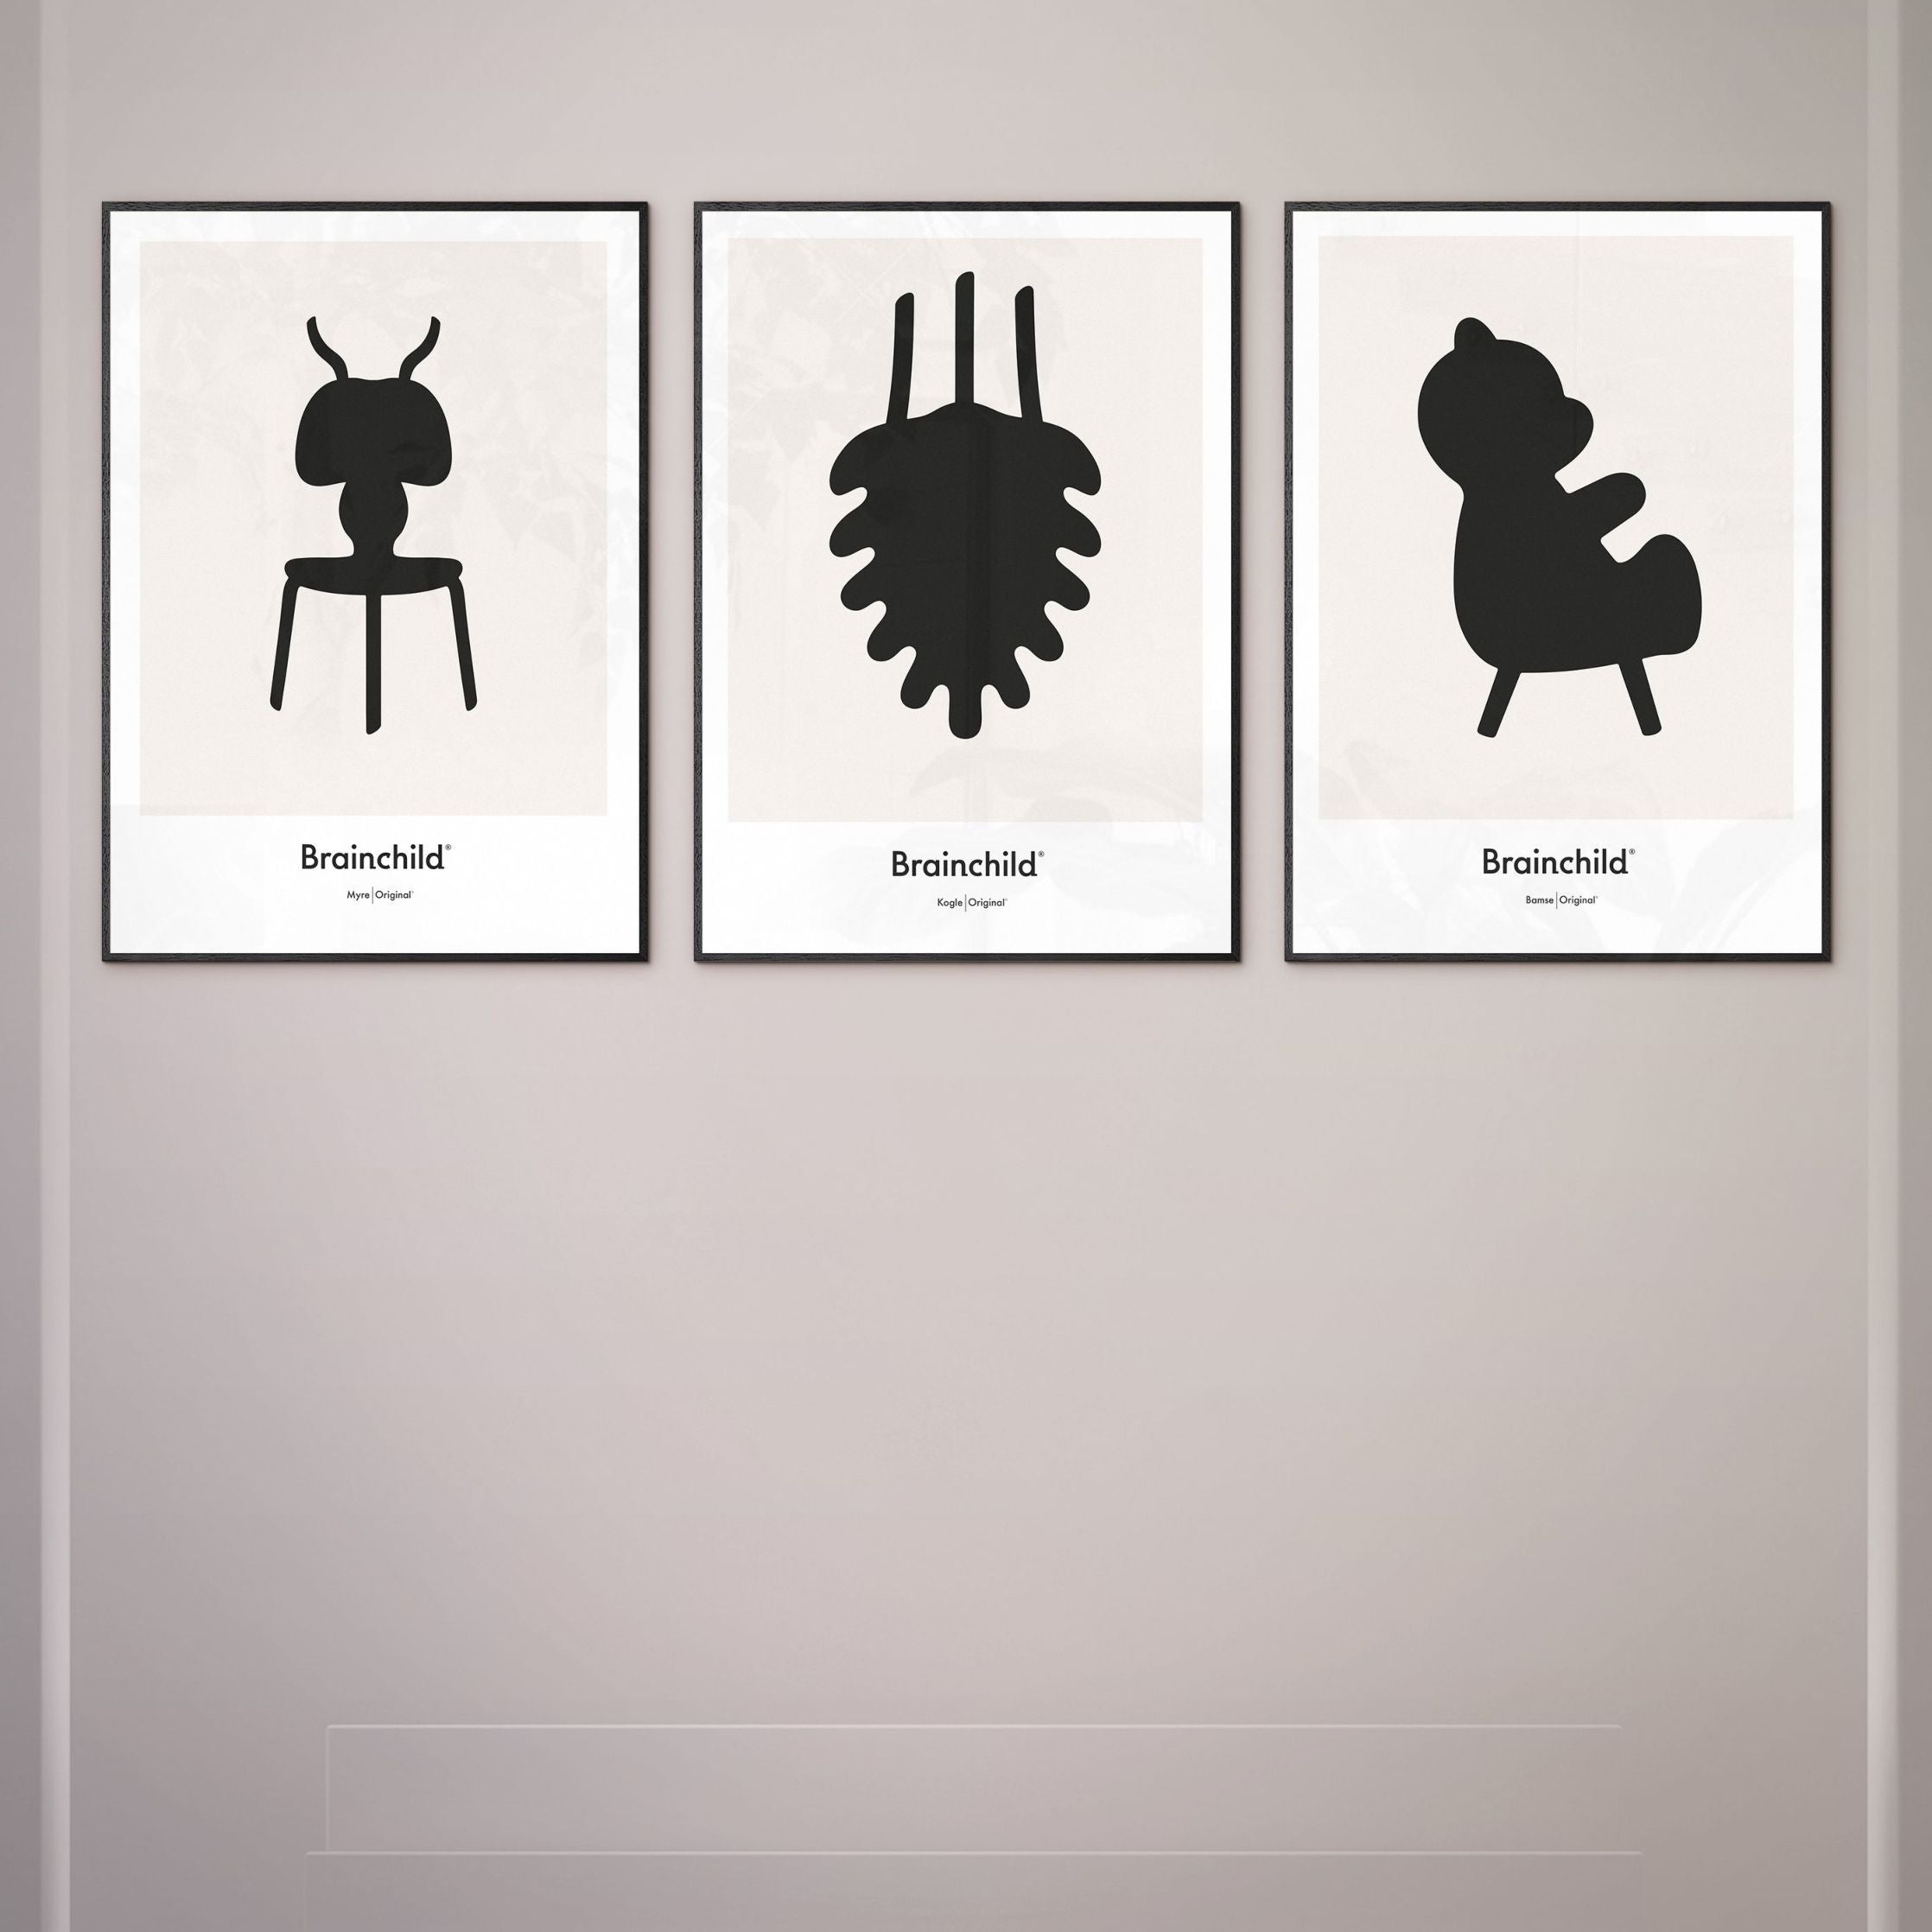 Brainchild Teddybär Design Icon Poster, Rahmen aus schwarz lackiertem Holz 30x40 Cm, grau